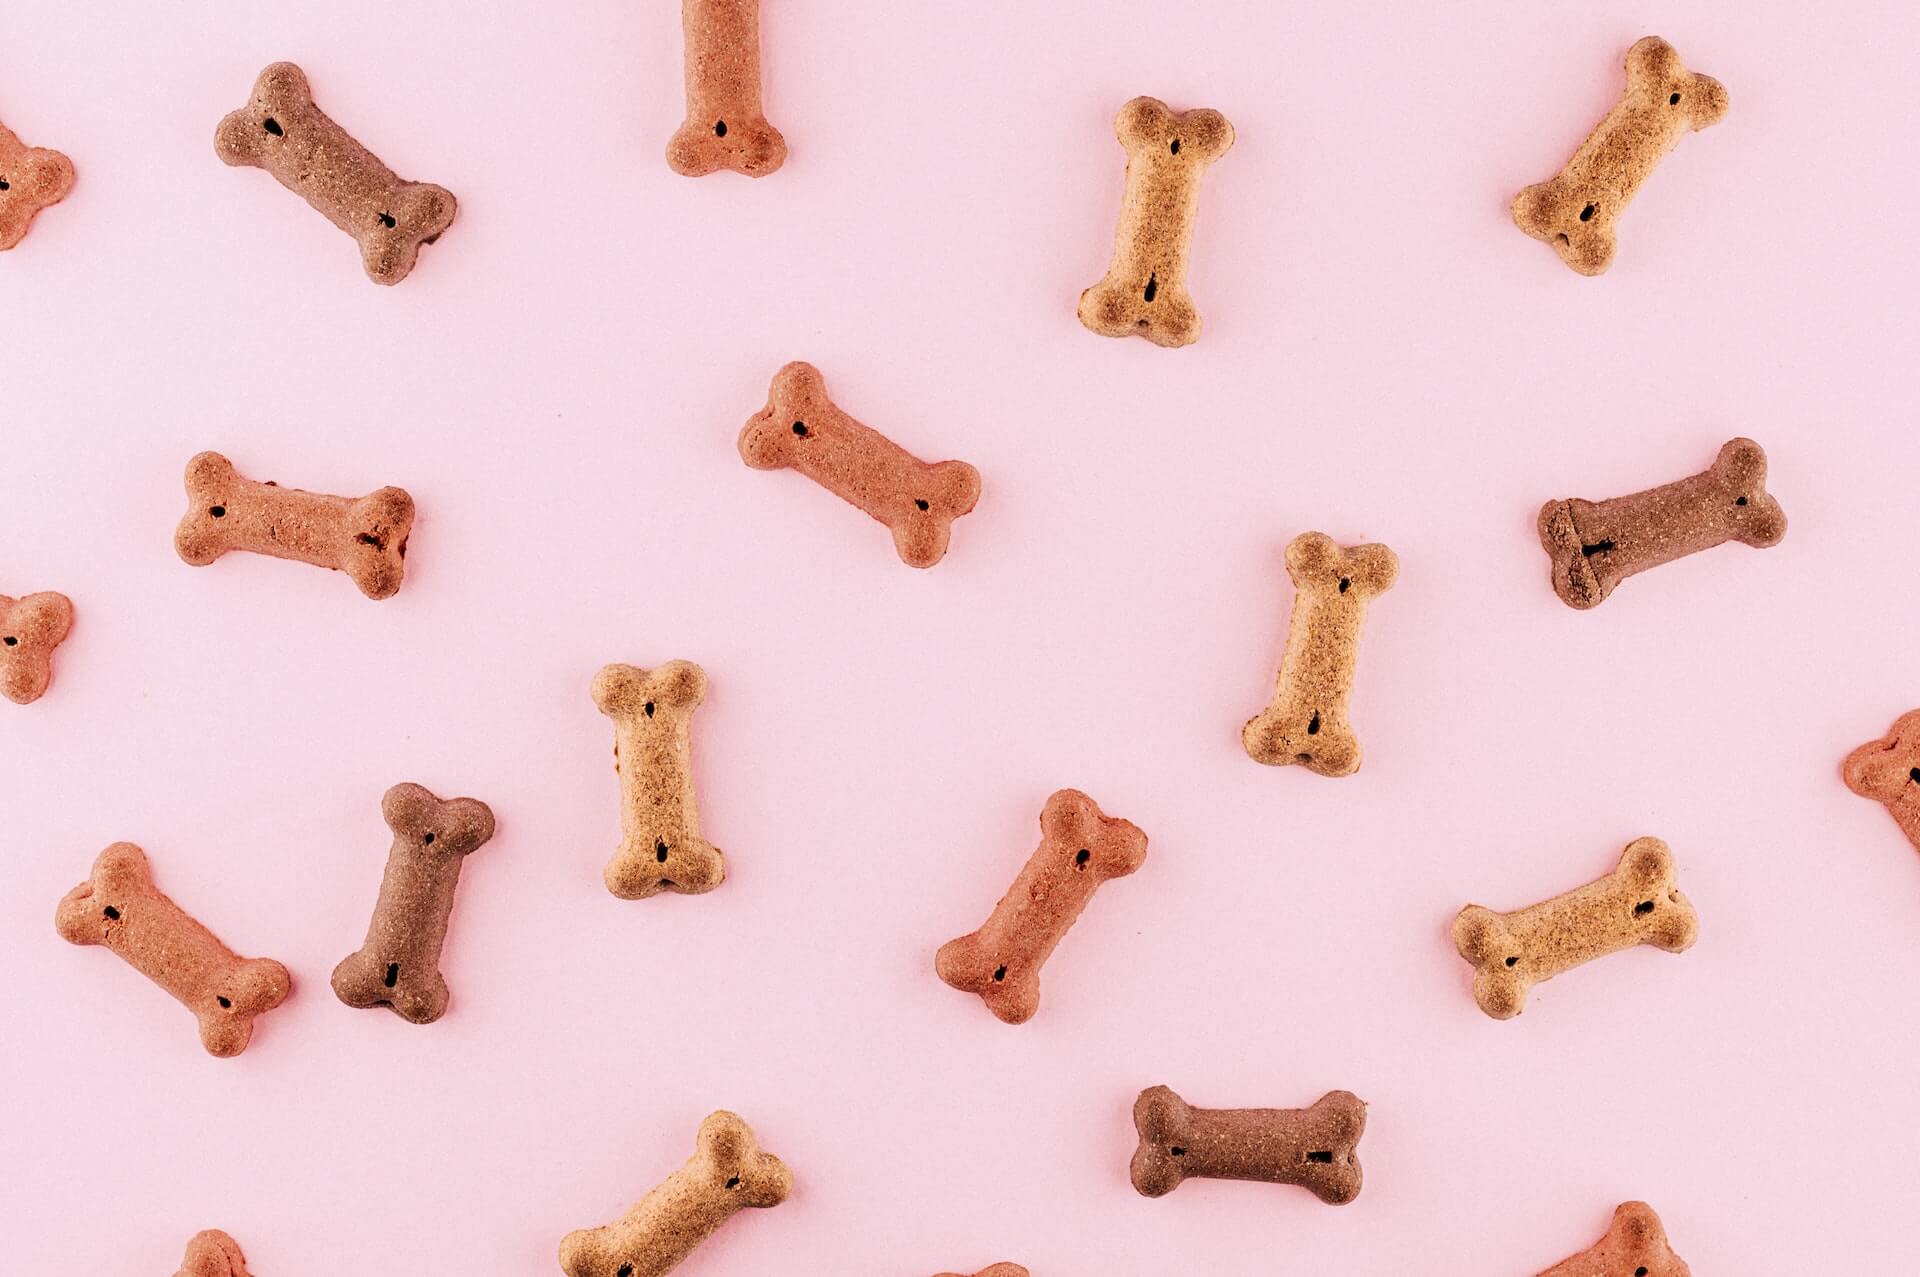 Alternating dog bone-shaped treats against a pink background.